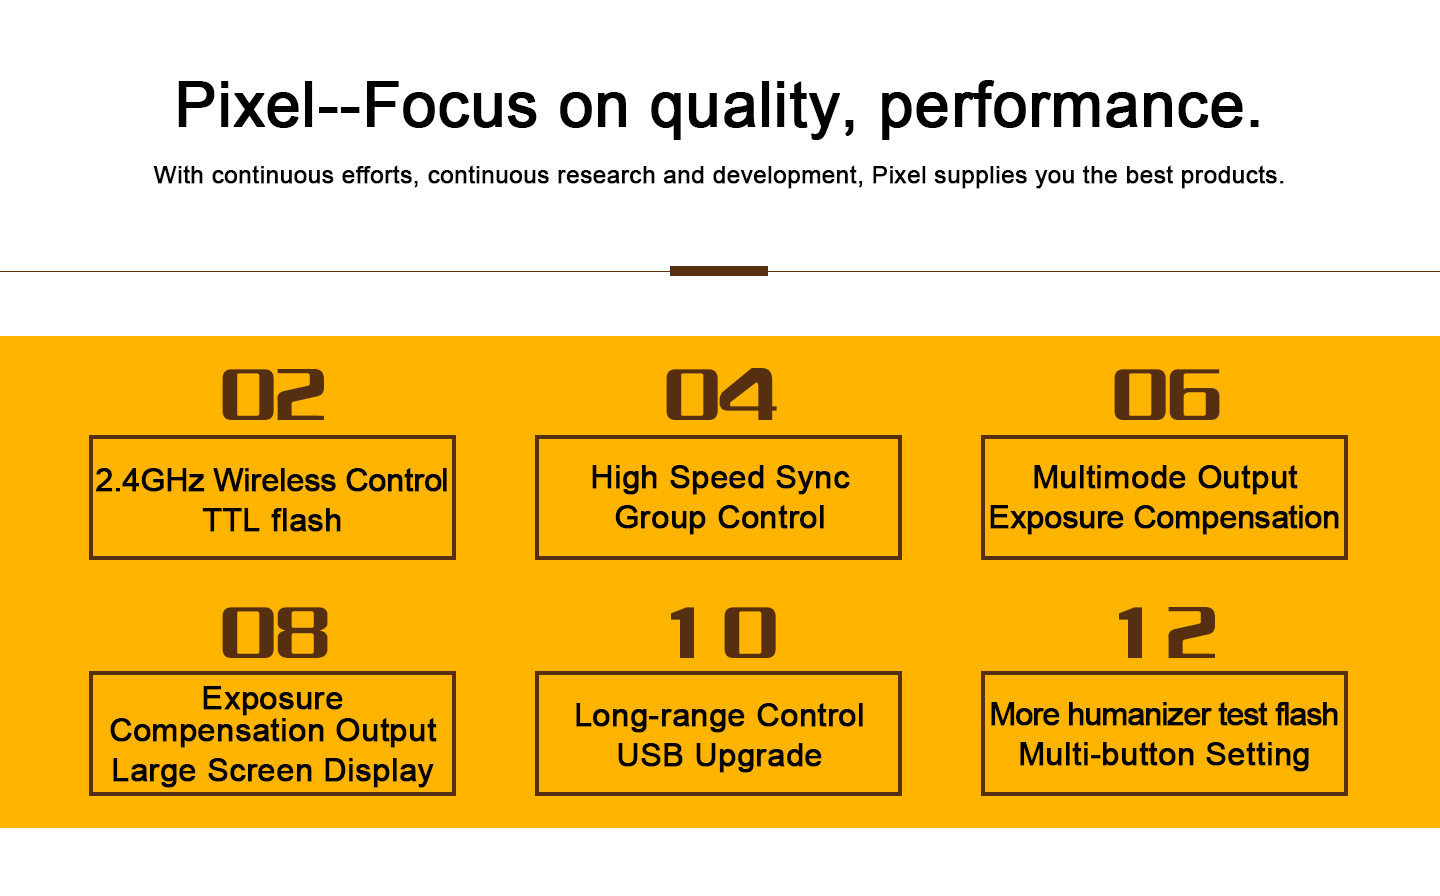 Pixel--Focus on quality, performance